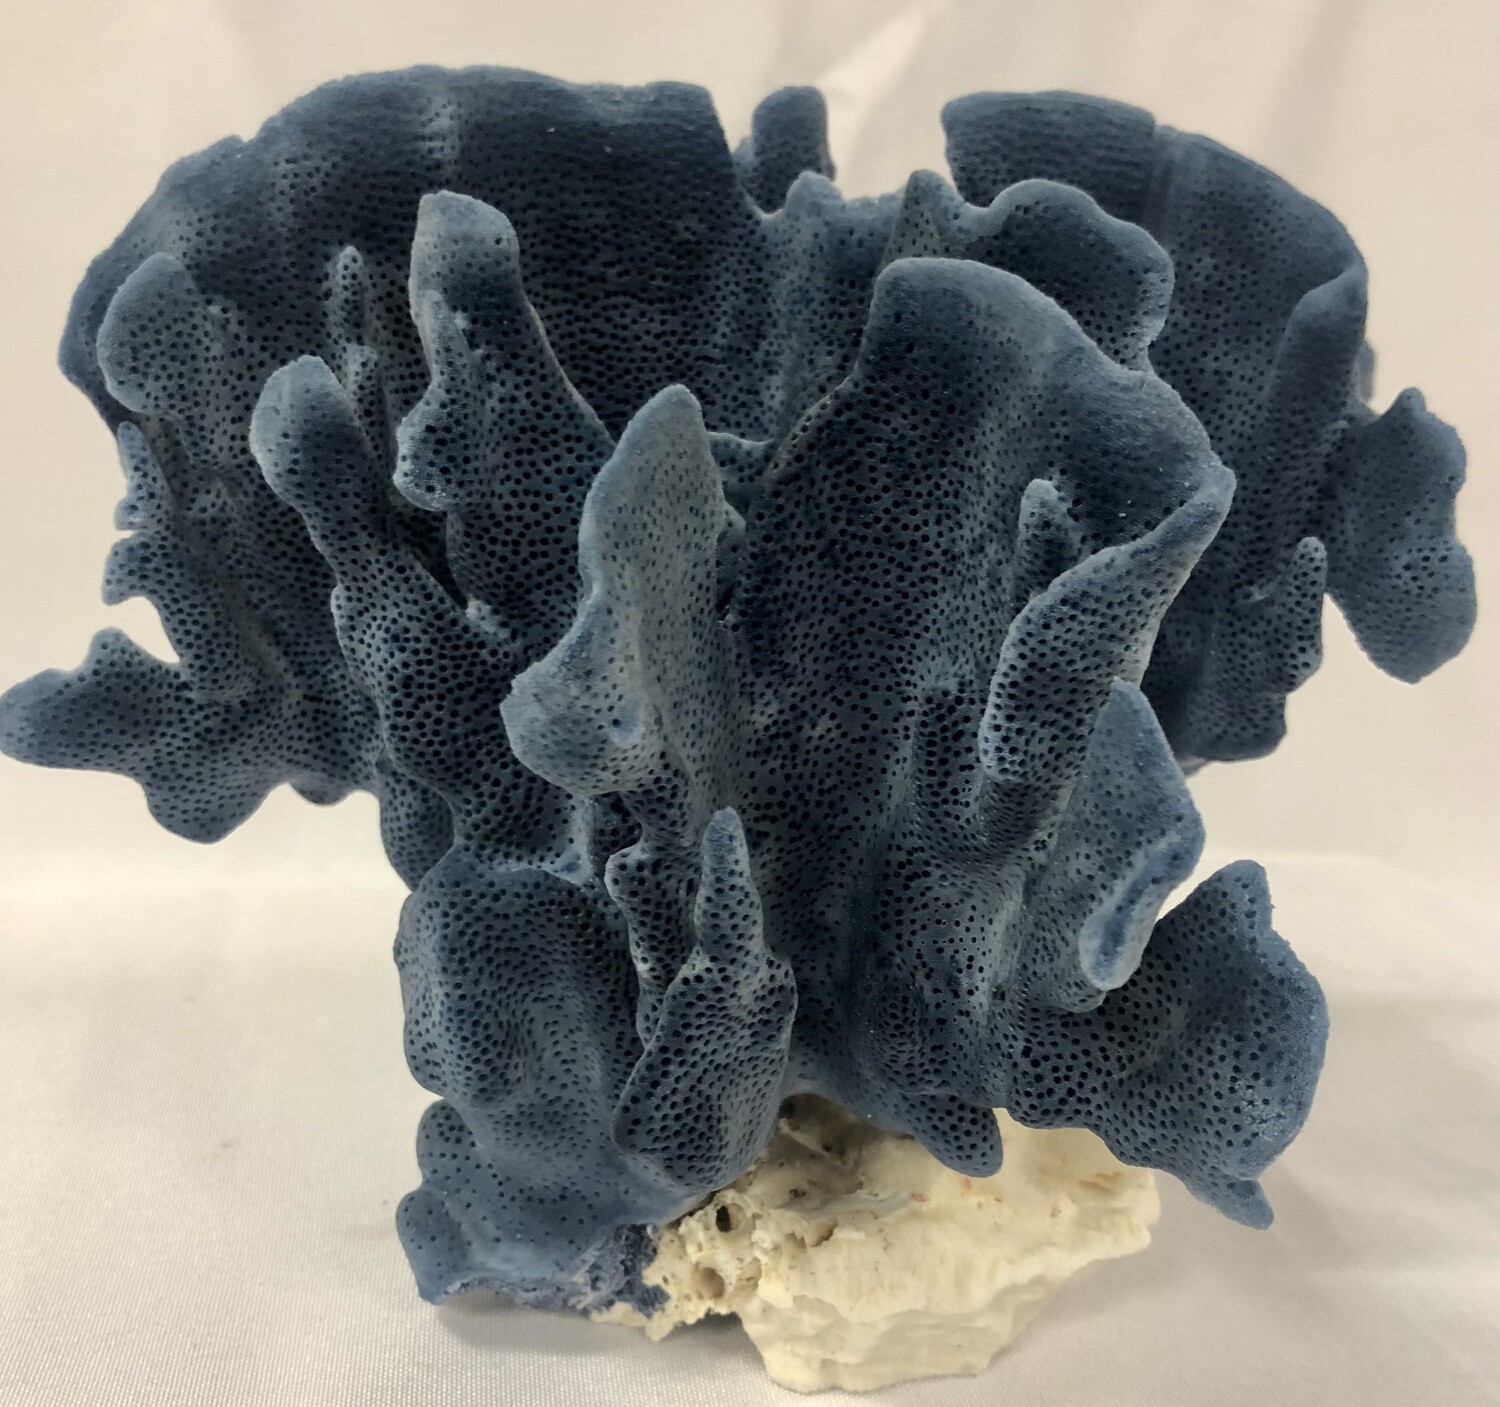 Authentic Blue Coral Specimen 7-10"